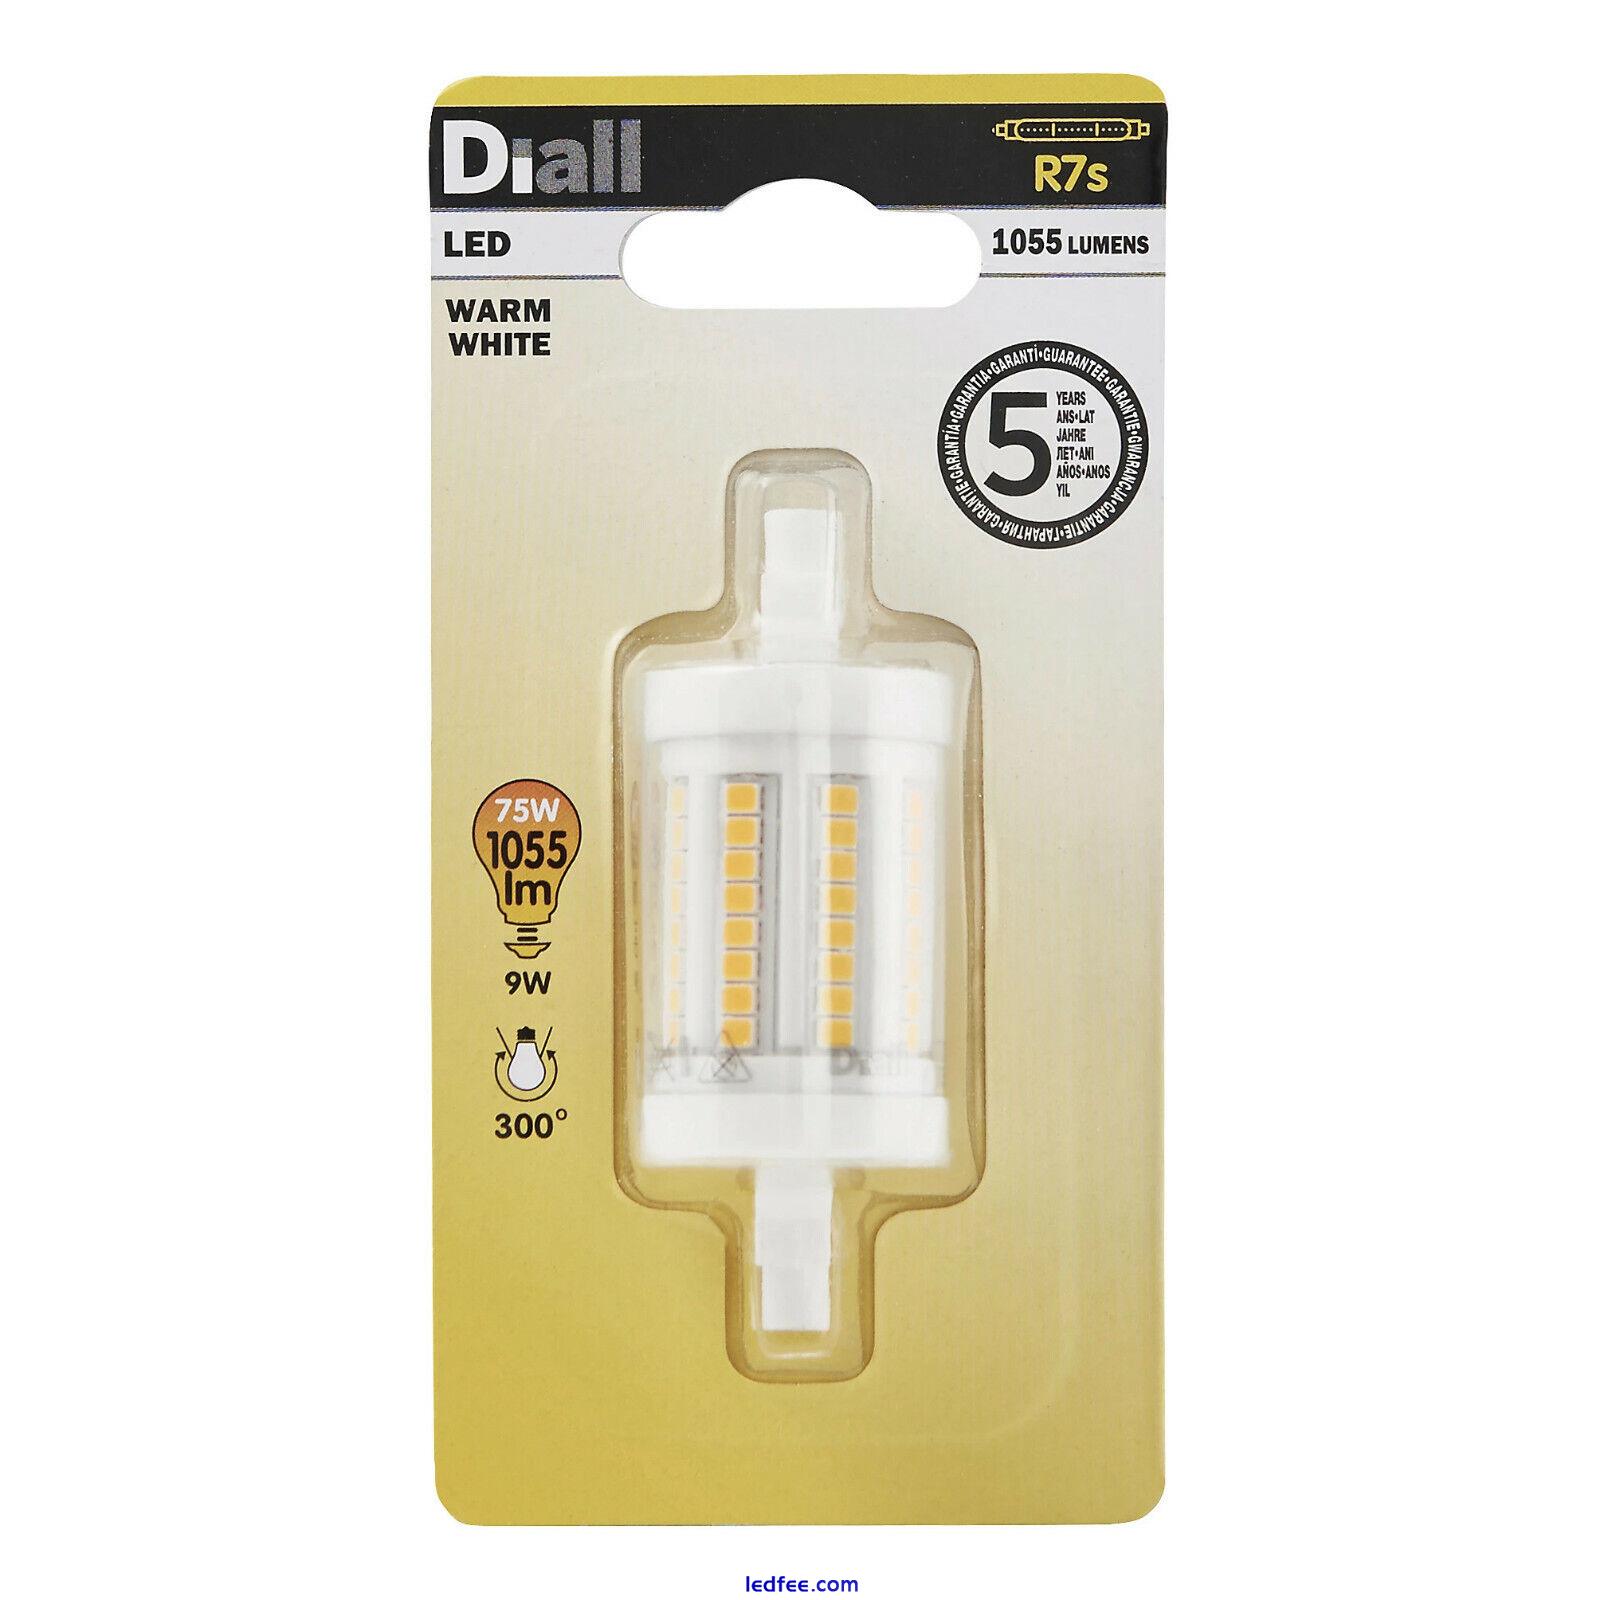 Diall R7s Warm White Tube LED Energy Saving Light Bulbs Choose Watt Output 2 